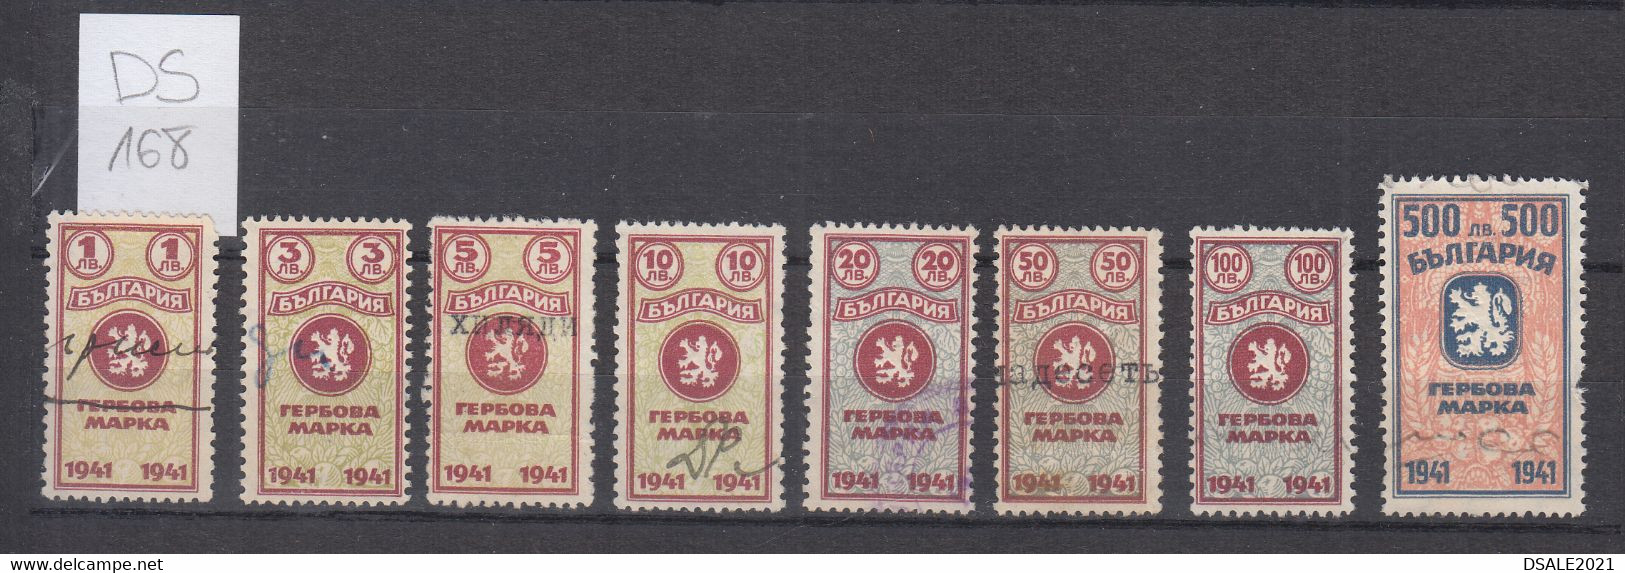 Bulgaria Bulgarie Bulgarije 1945 Bulgarian Fiscal Revenue Revenues Stamp Stamps (ds168) - Official Stamps